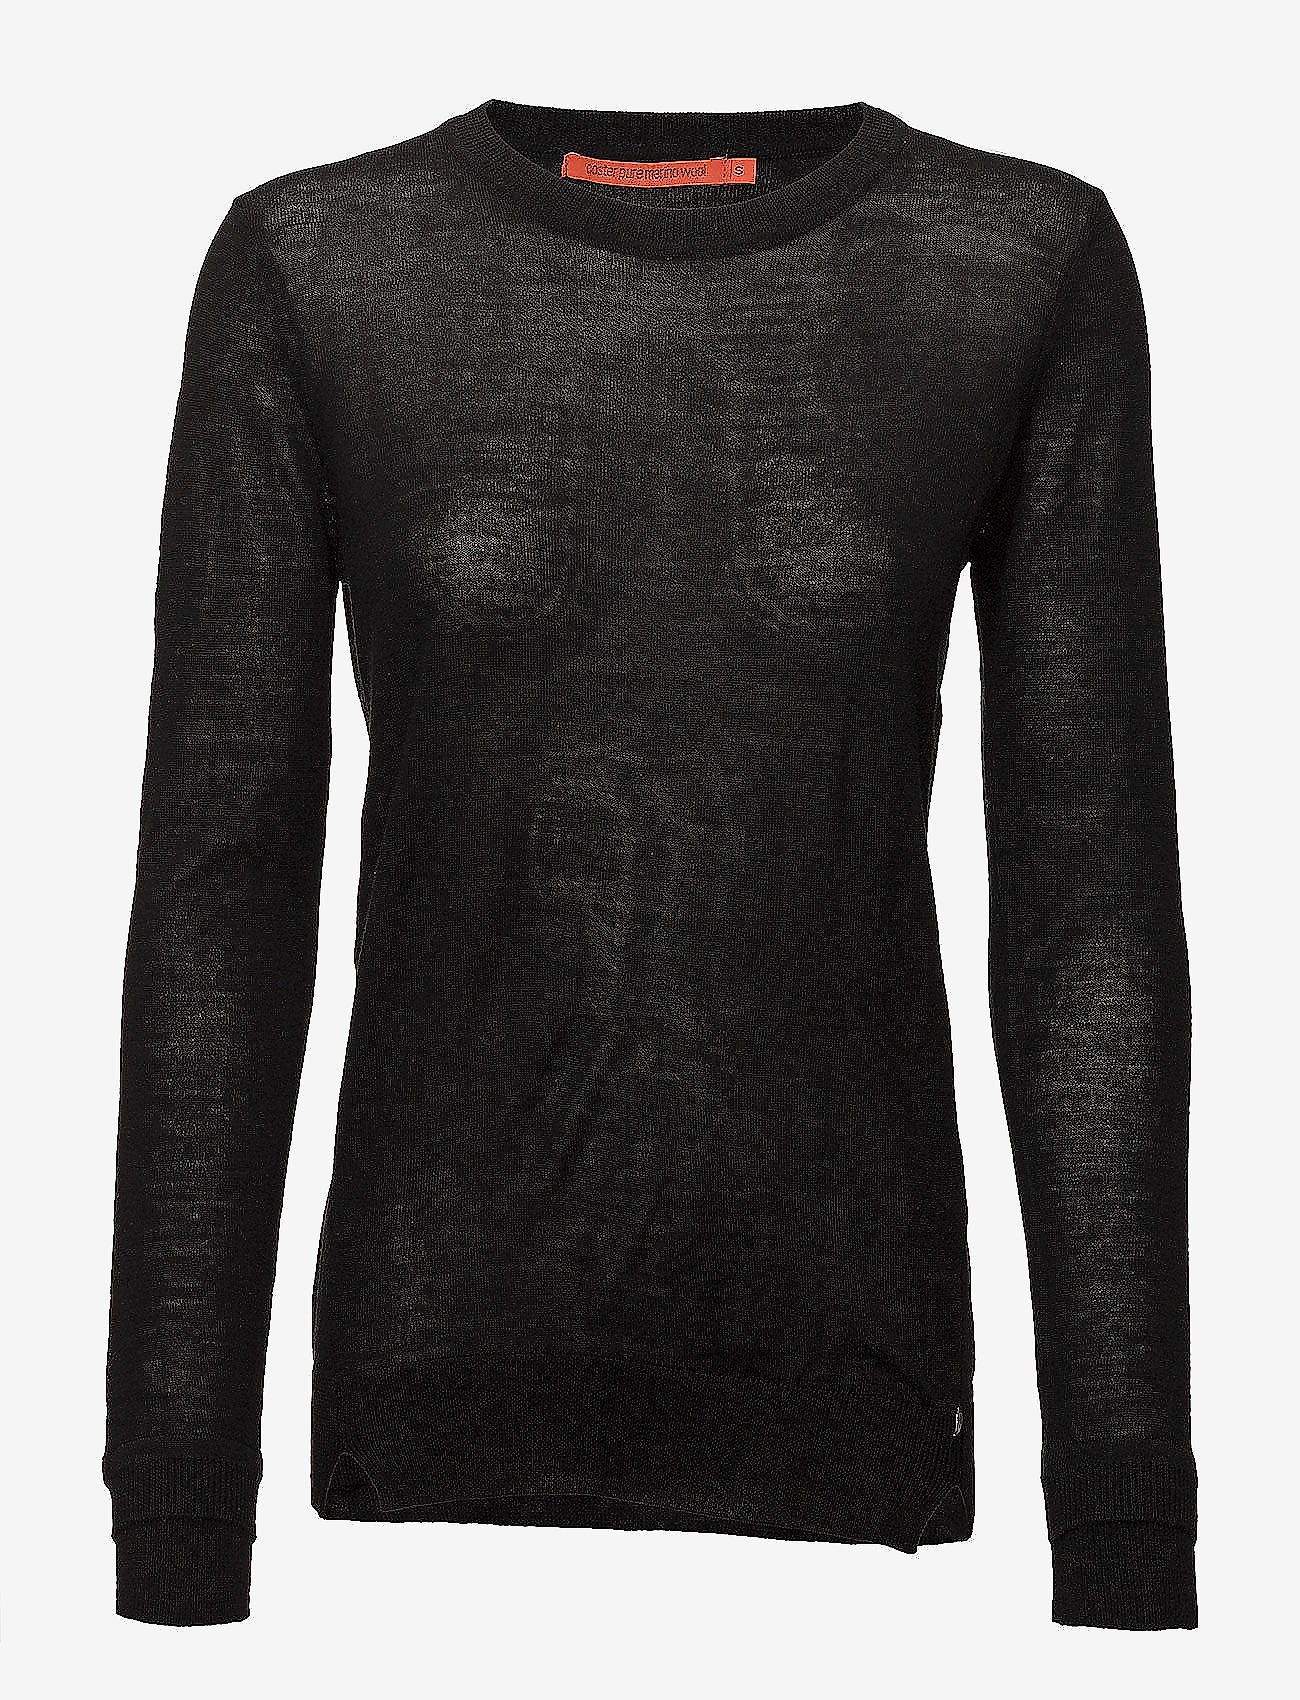 Coster Copenhagen - Round neck knit top merino (Basic) - black - 0